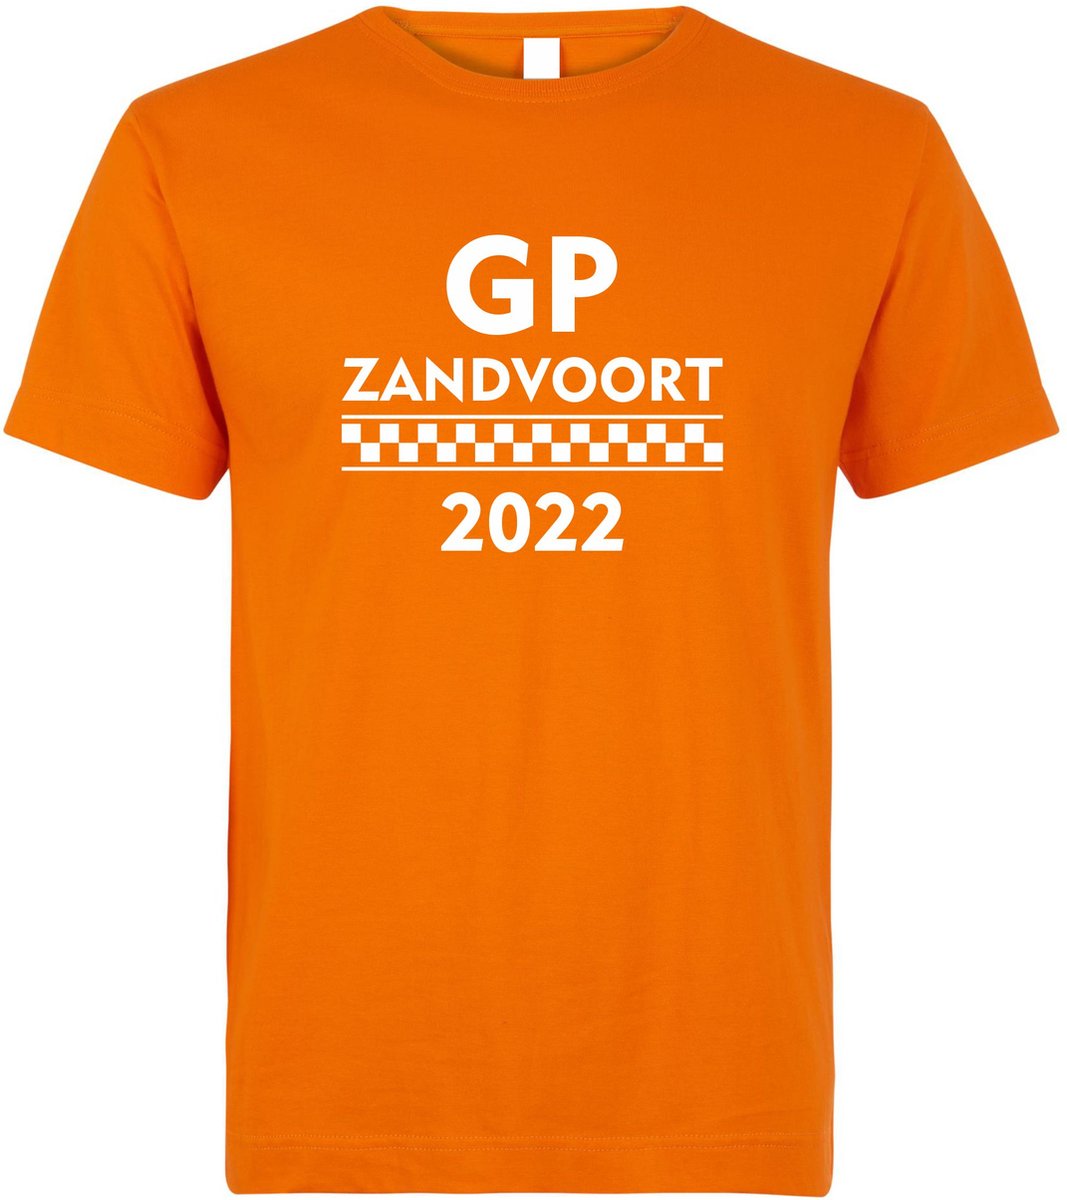 T-shirt kinderen GP Zandvoort 2022 | Max Verstappen / Red Bull Racing / Formule 1 fan | Grand Prix Circuit Zandvoort | kleding shirt | Oranje | maat 152